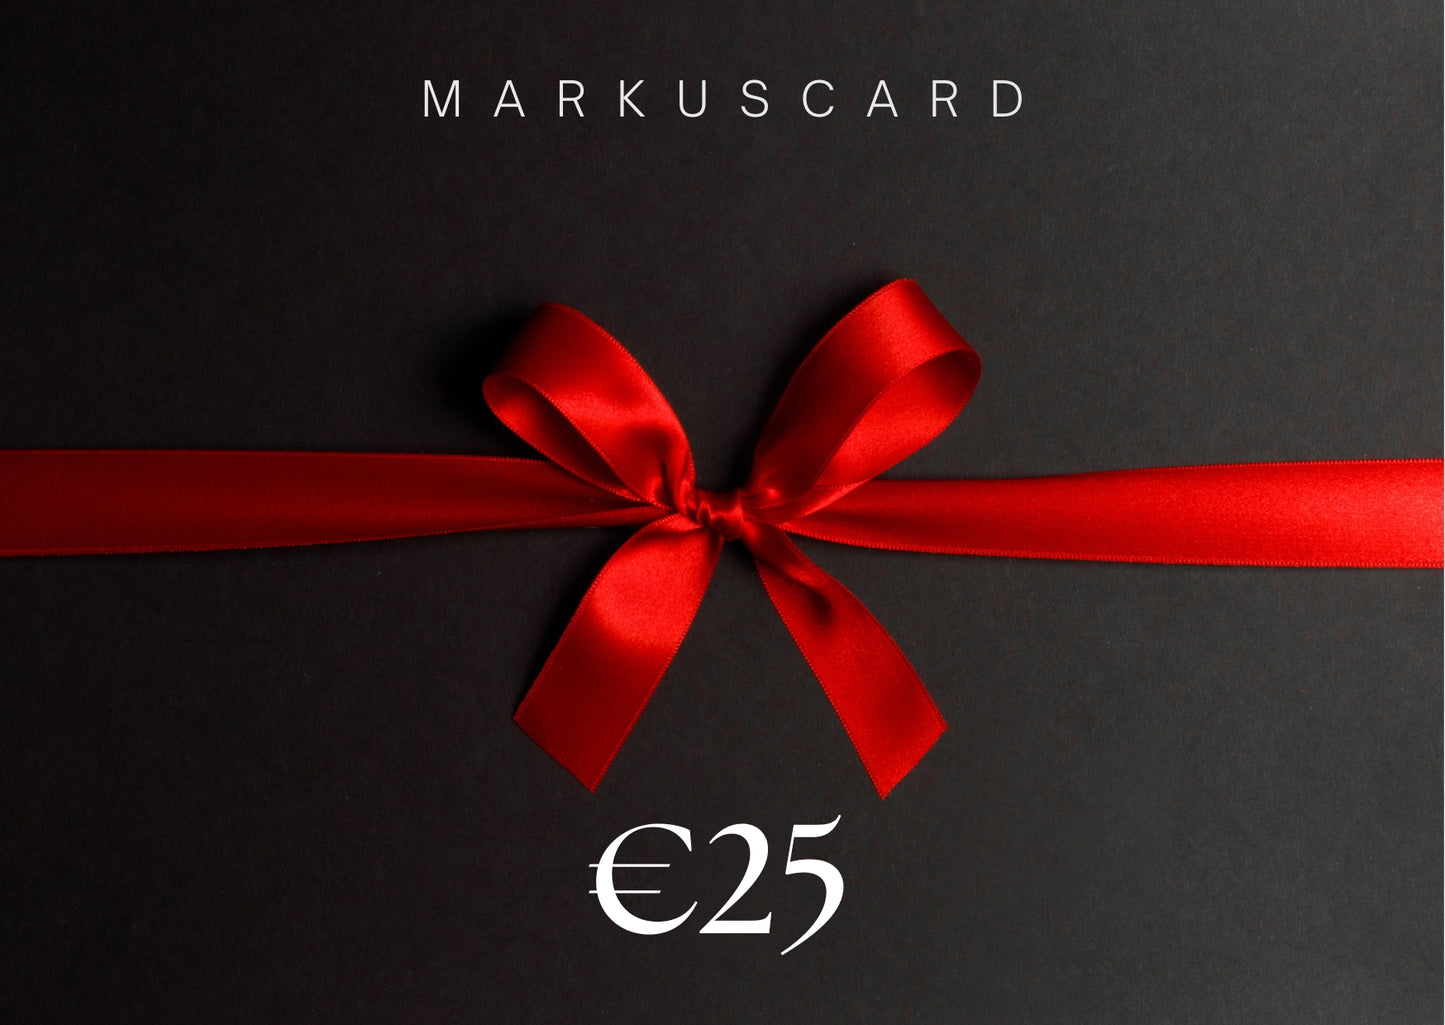 Markus Card